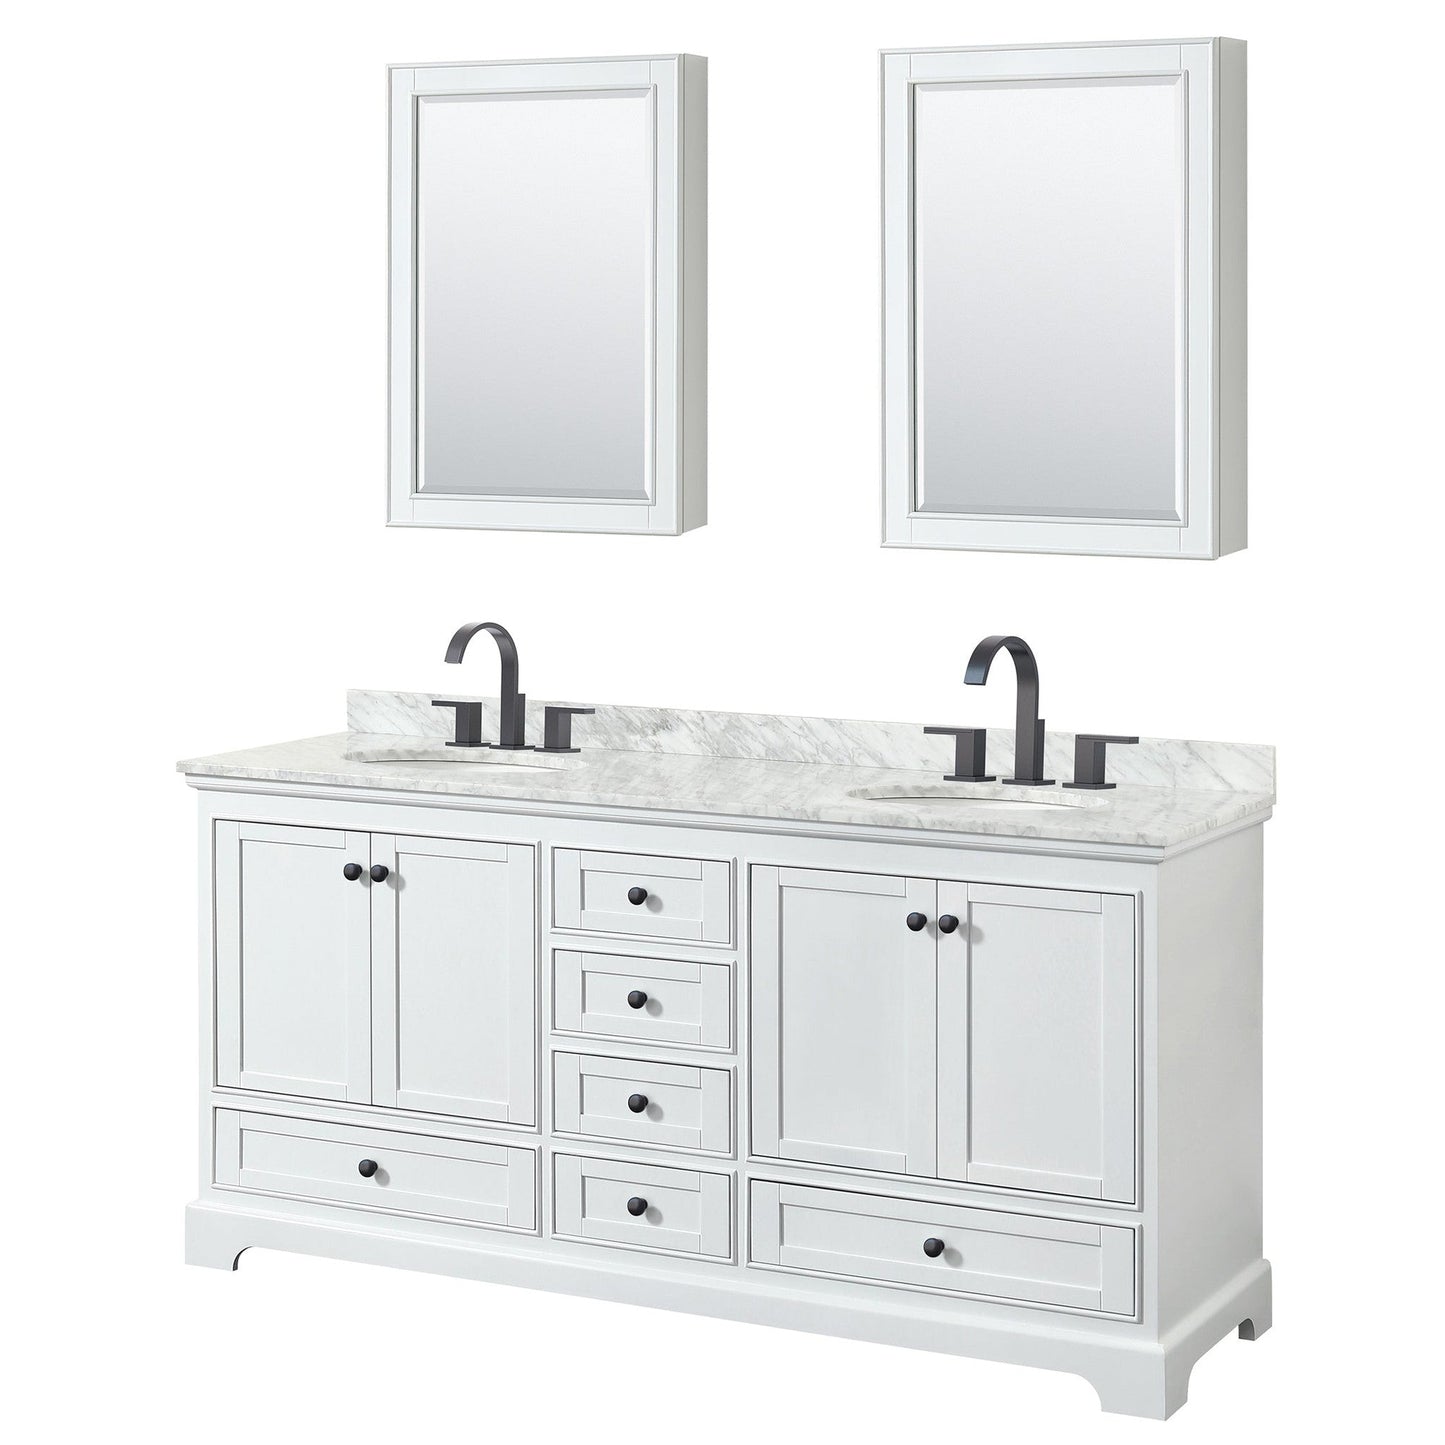 Deborah 72" Double Bathroom Vanity in White, White Carrara Marble Countertop, Undermount Oval Sinks, Matte Black Trim, Medicine Cabinets